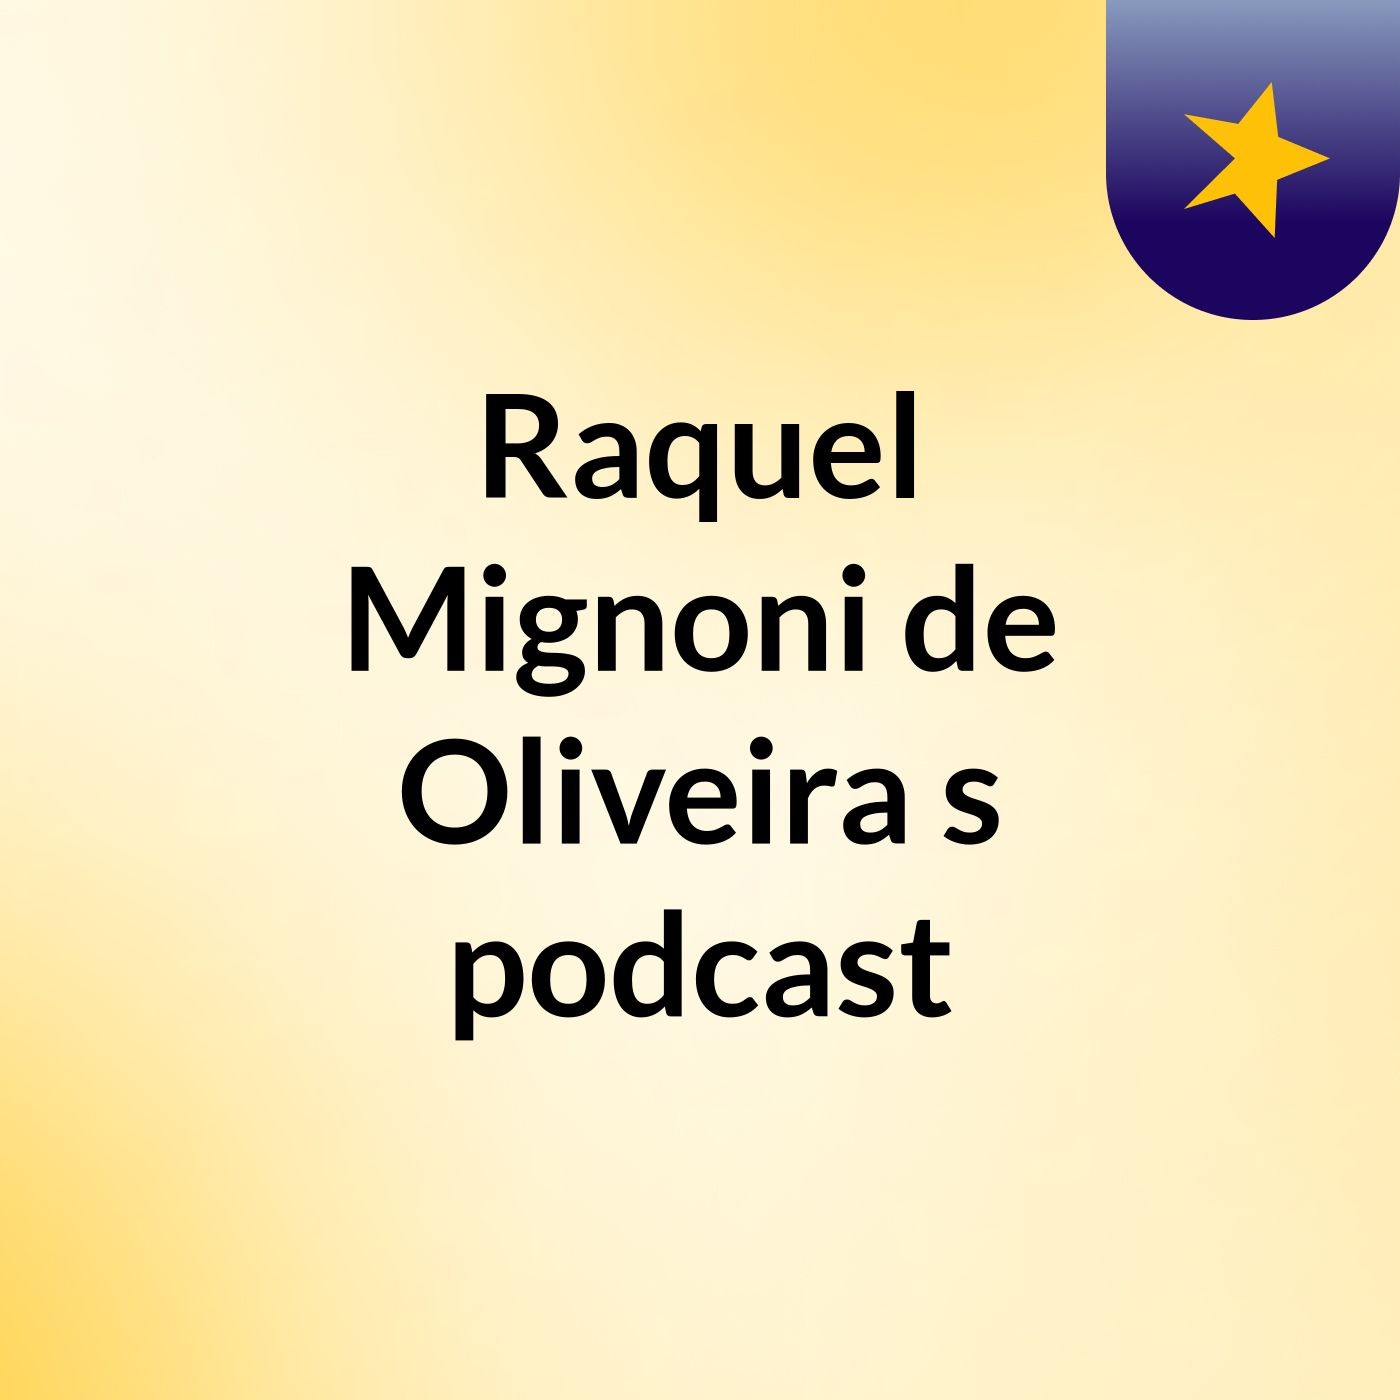 Raquel Mignoni de Oliveira's podcast